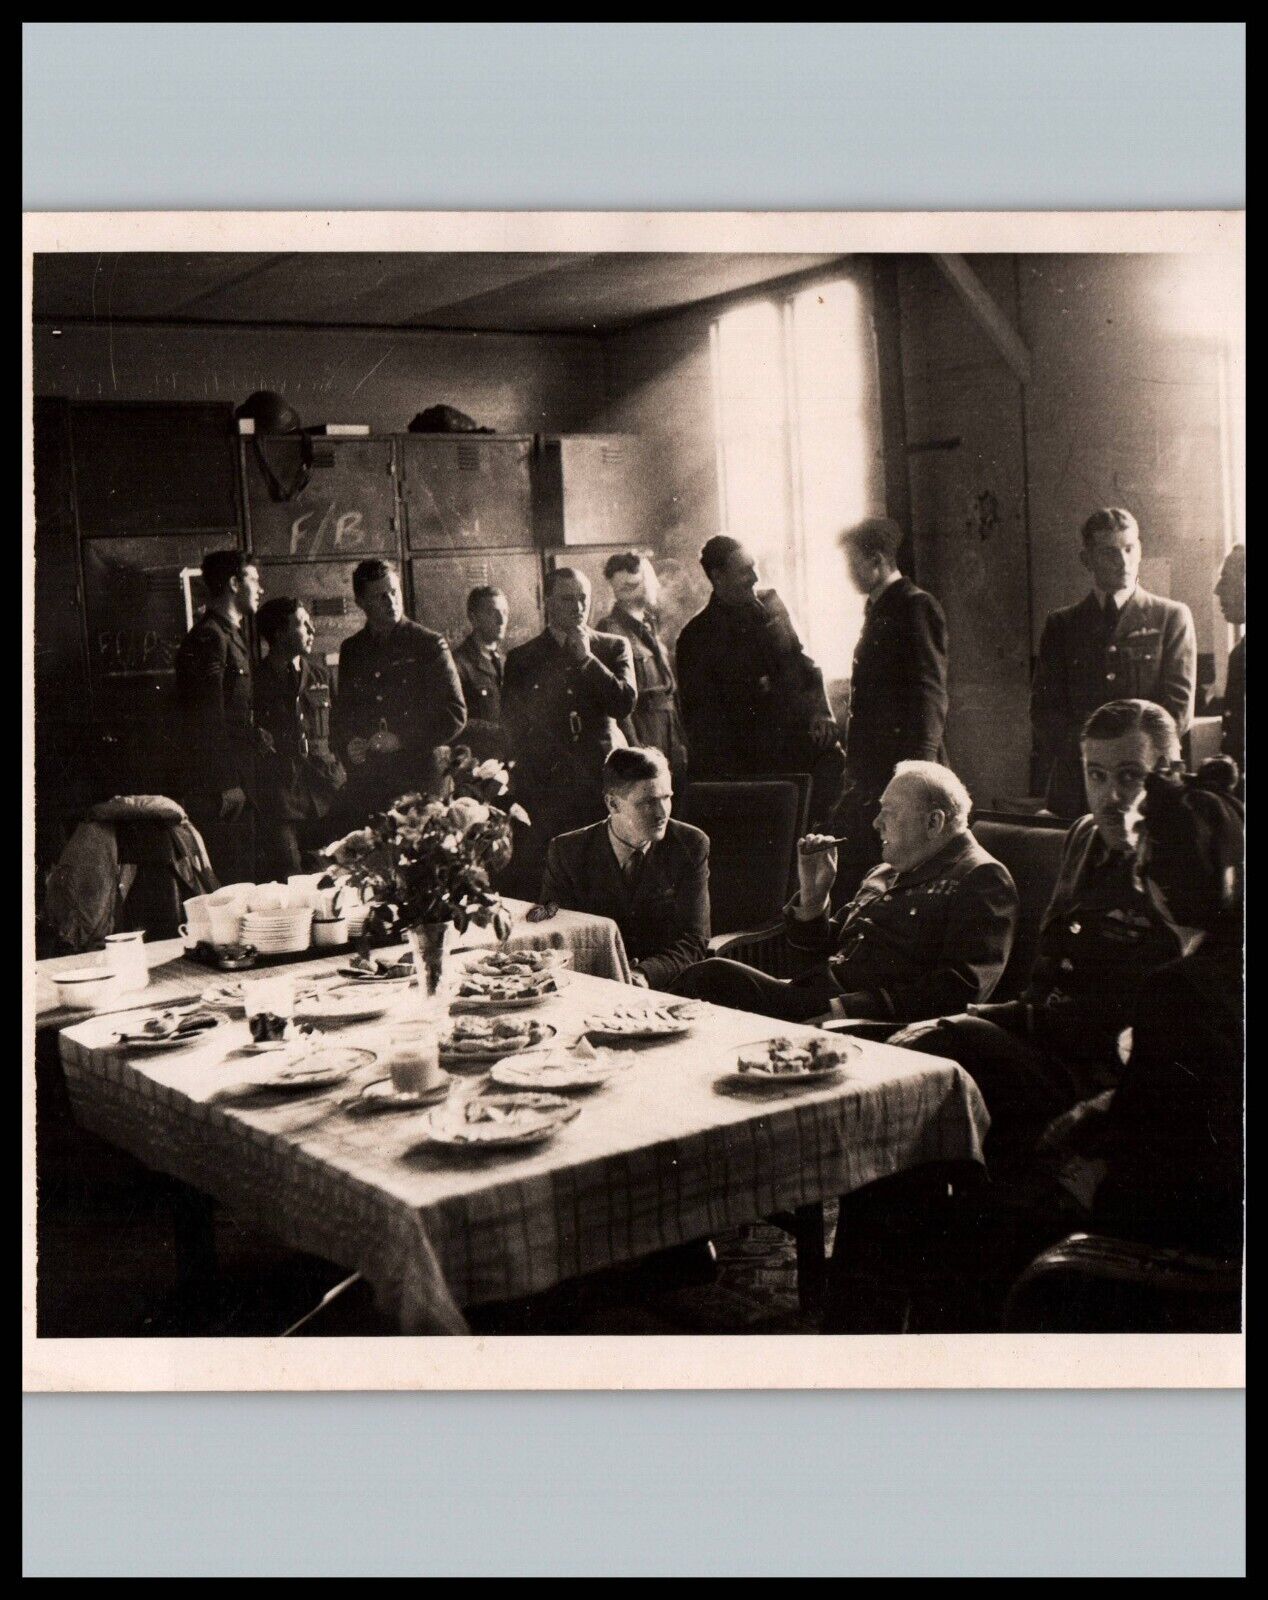 WWII UK LEADER WINSTON CHURCHILL PORTRAIT 1940s ORIG VINTAGE PRESS PHOTO 400